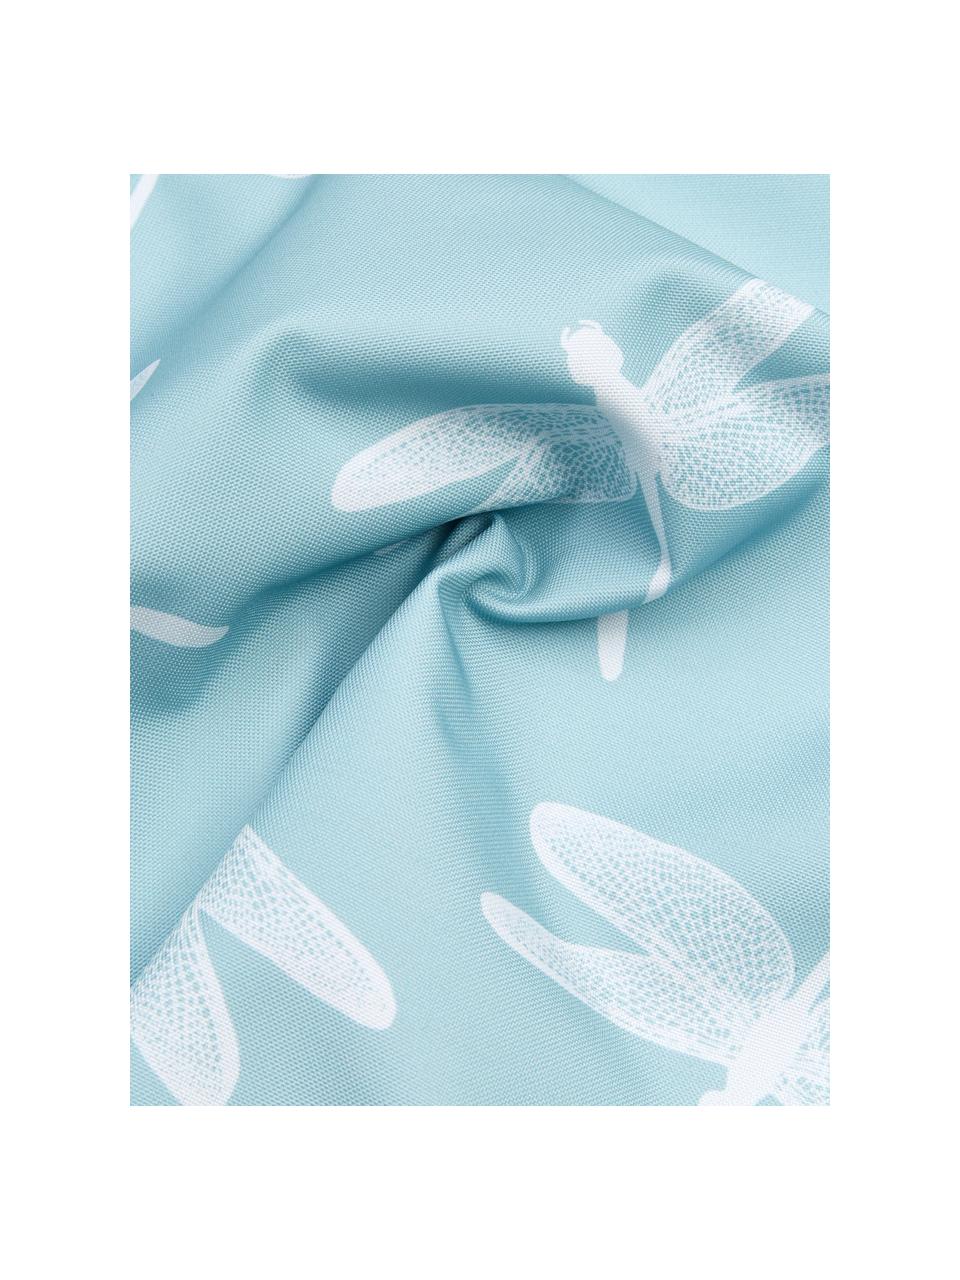 Outdoor-Kissen Dragonfly mit Libellenmotiven, 100% Polyester, Blau, Weiß, B 47 x L 47 cm